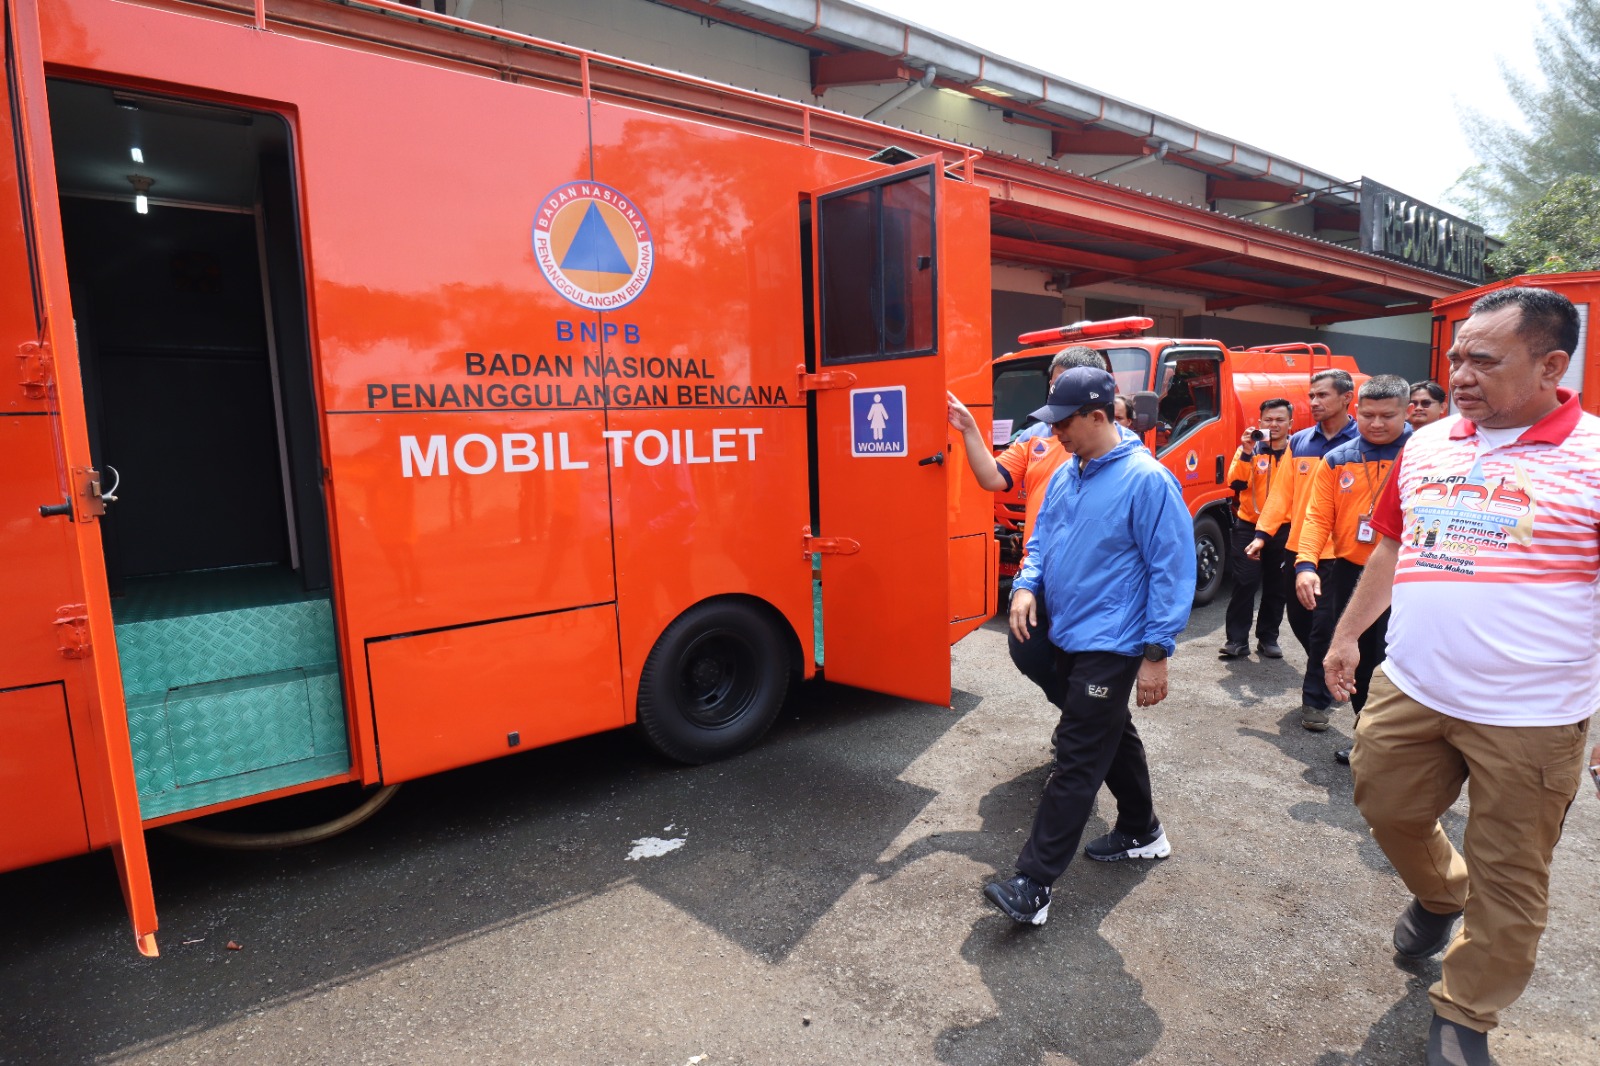 Kepala Badan Nasional Penanggulangan Bencana (BNPB) Letjen TNI Suharyanto, S.Sos., M.M (jaket biru) melihat mobil toilet umum milik BNPB di Gedung Logistik dan Peralatan BNPB, Kawasan INA DRTG Sentul, Kabupaten Bogor, Jawa Barat pada Jumat (8/12).